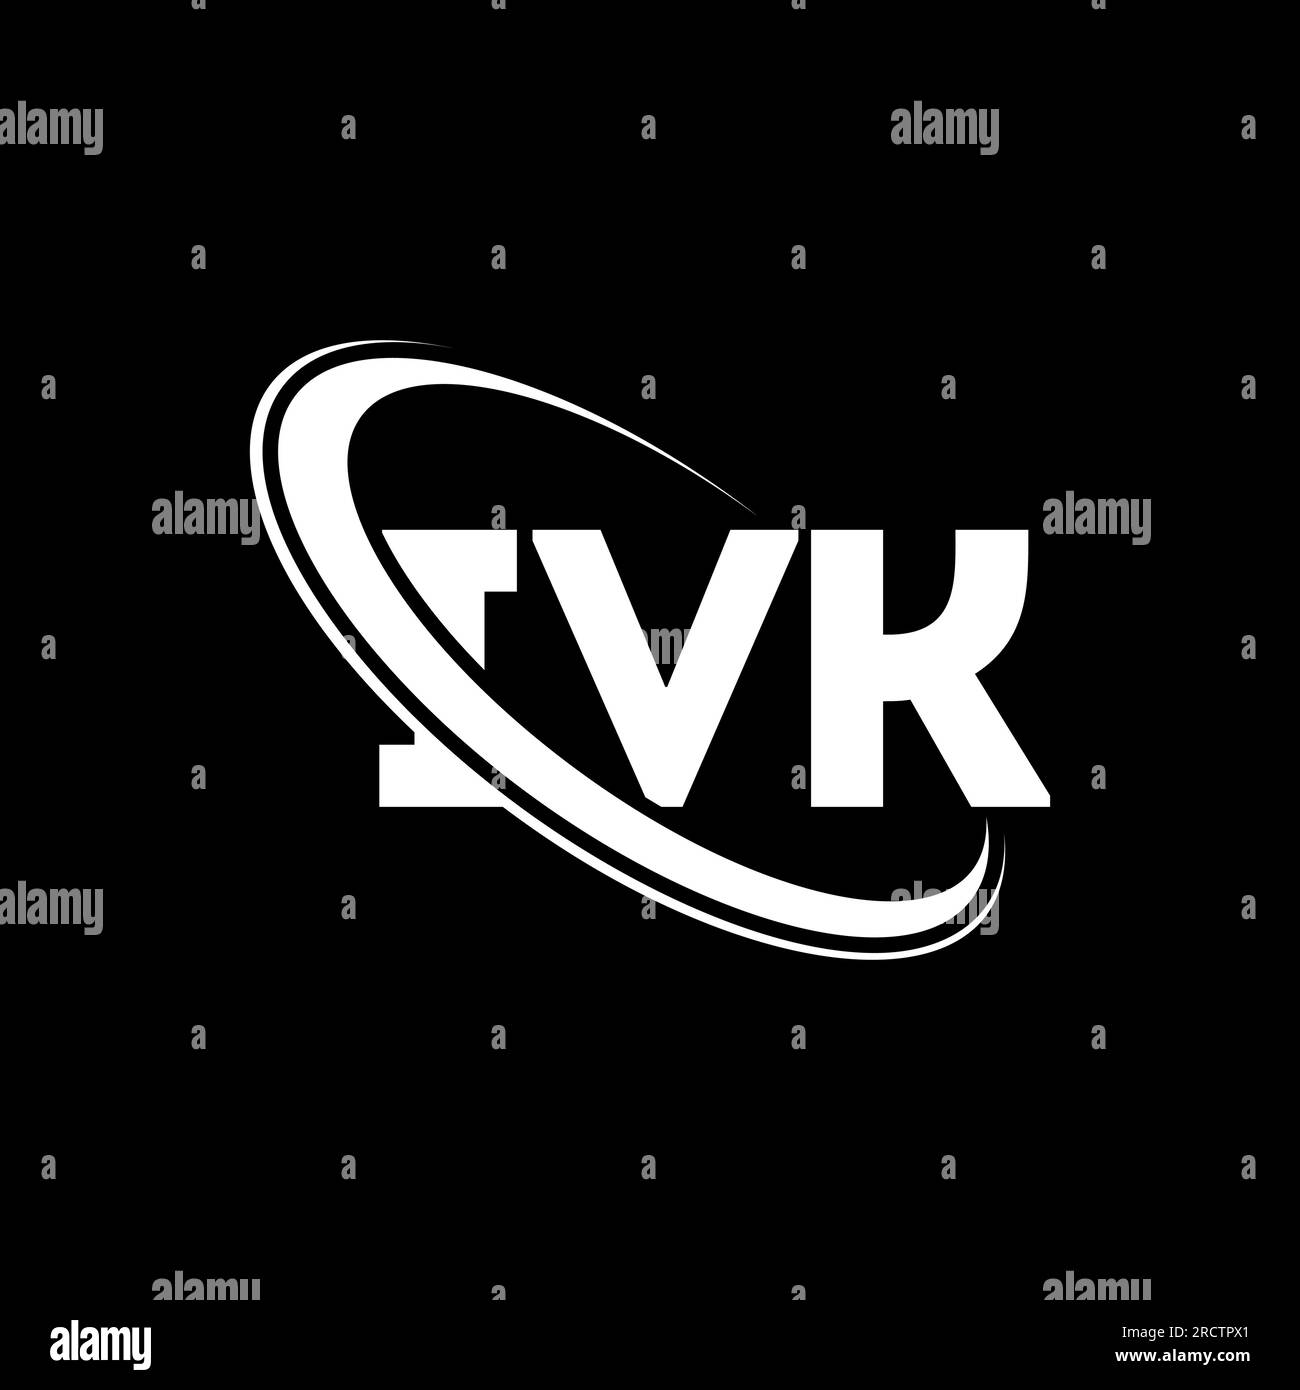 IVK logo. IVK letter. IVK letter logo design. Initials IVK logo linked with circle and uppercase monogram logo. IVK typography for technology, busines Stock Vector